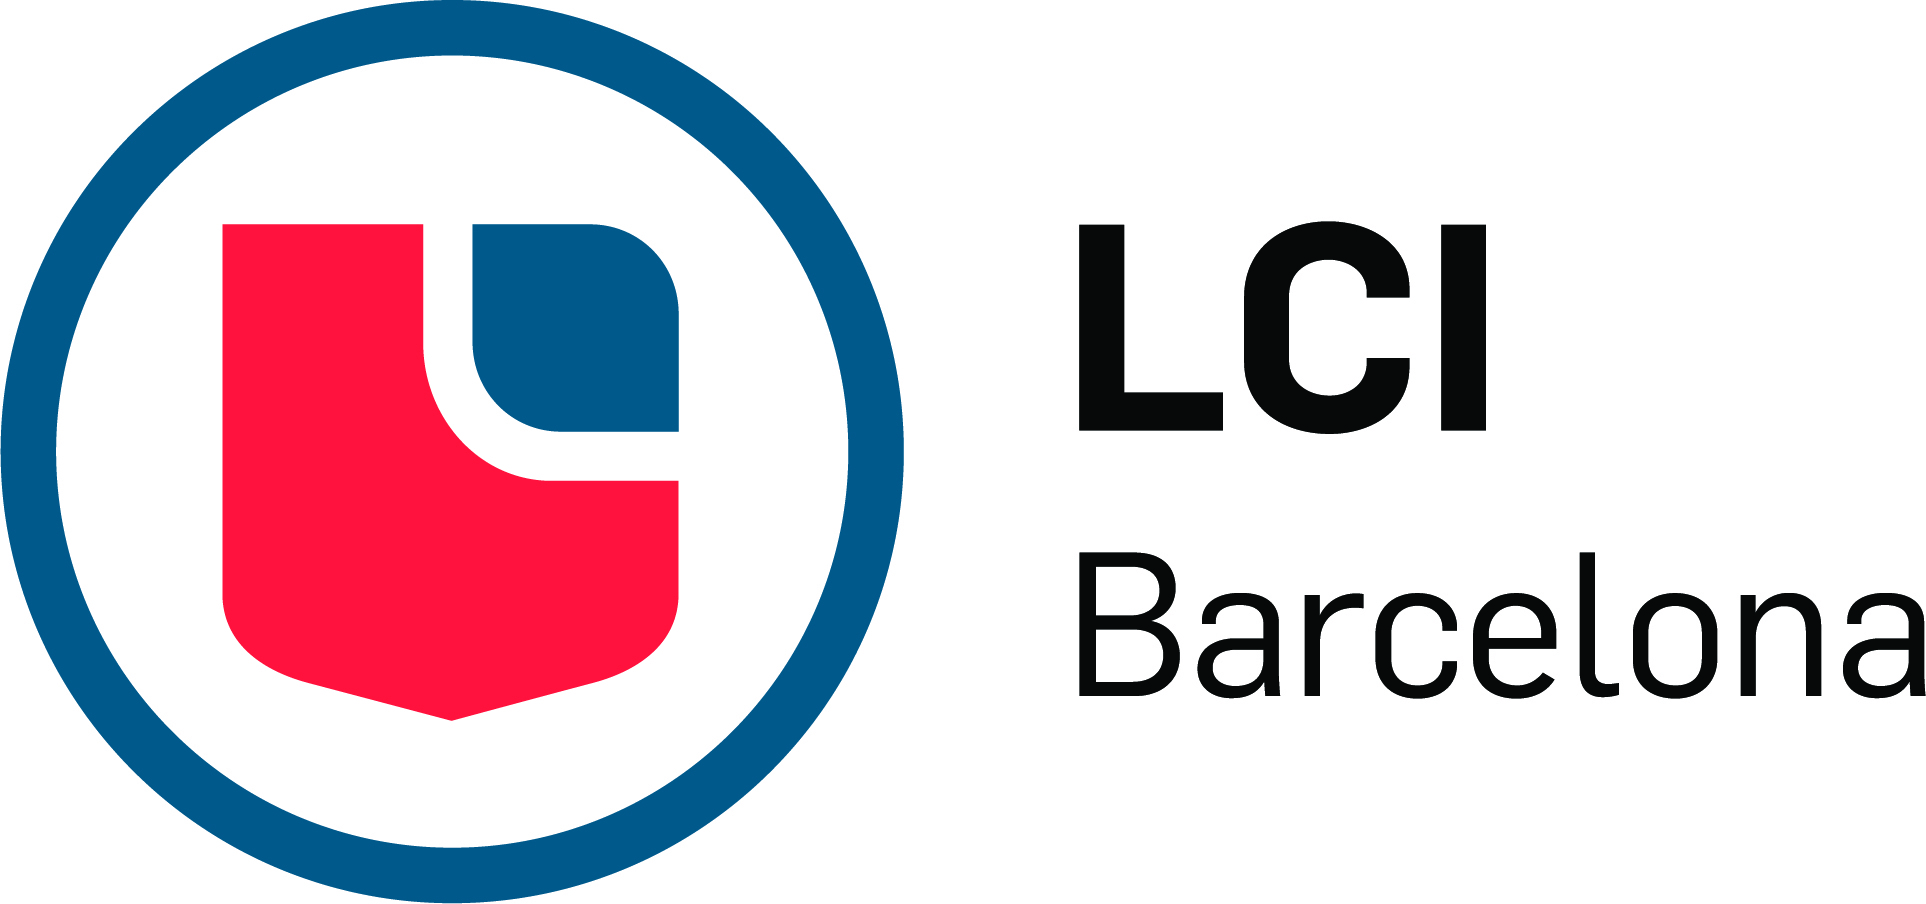 LCI Barcelona